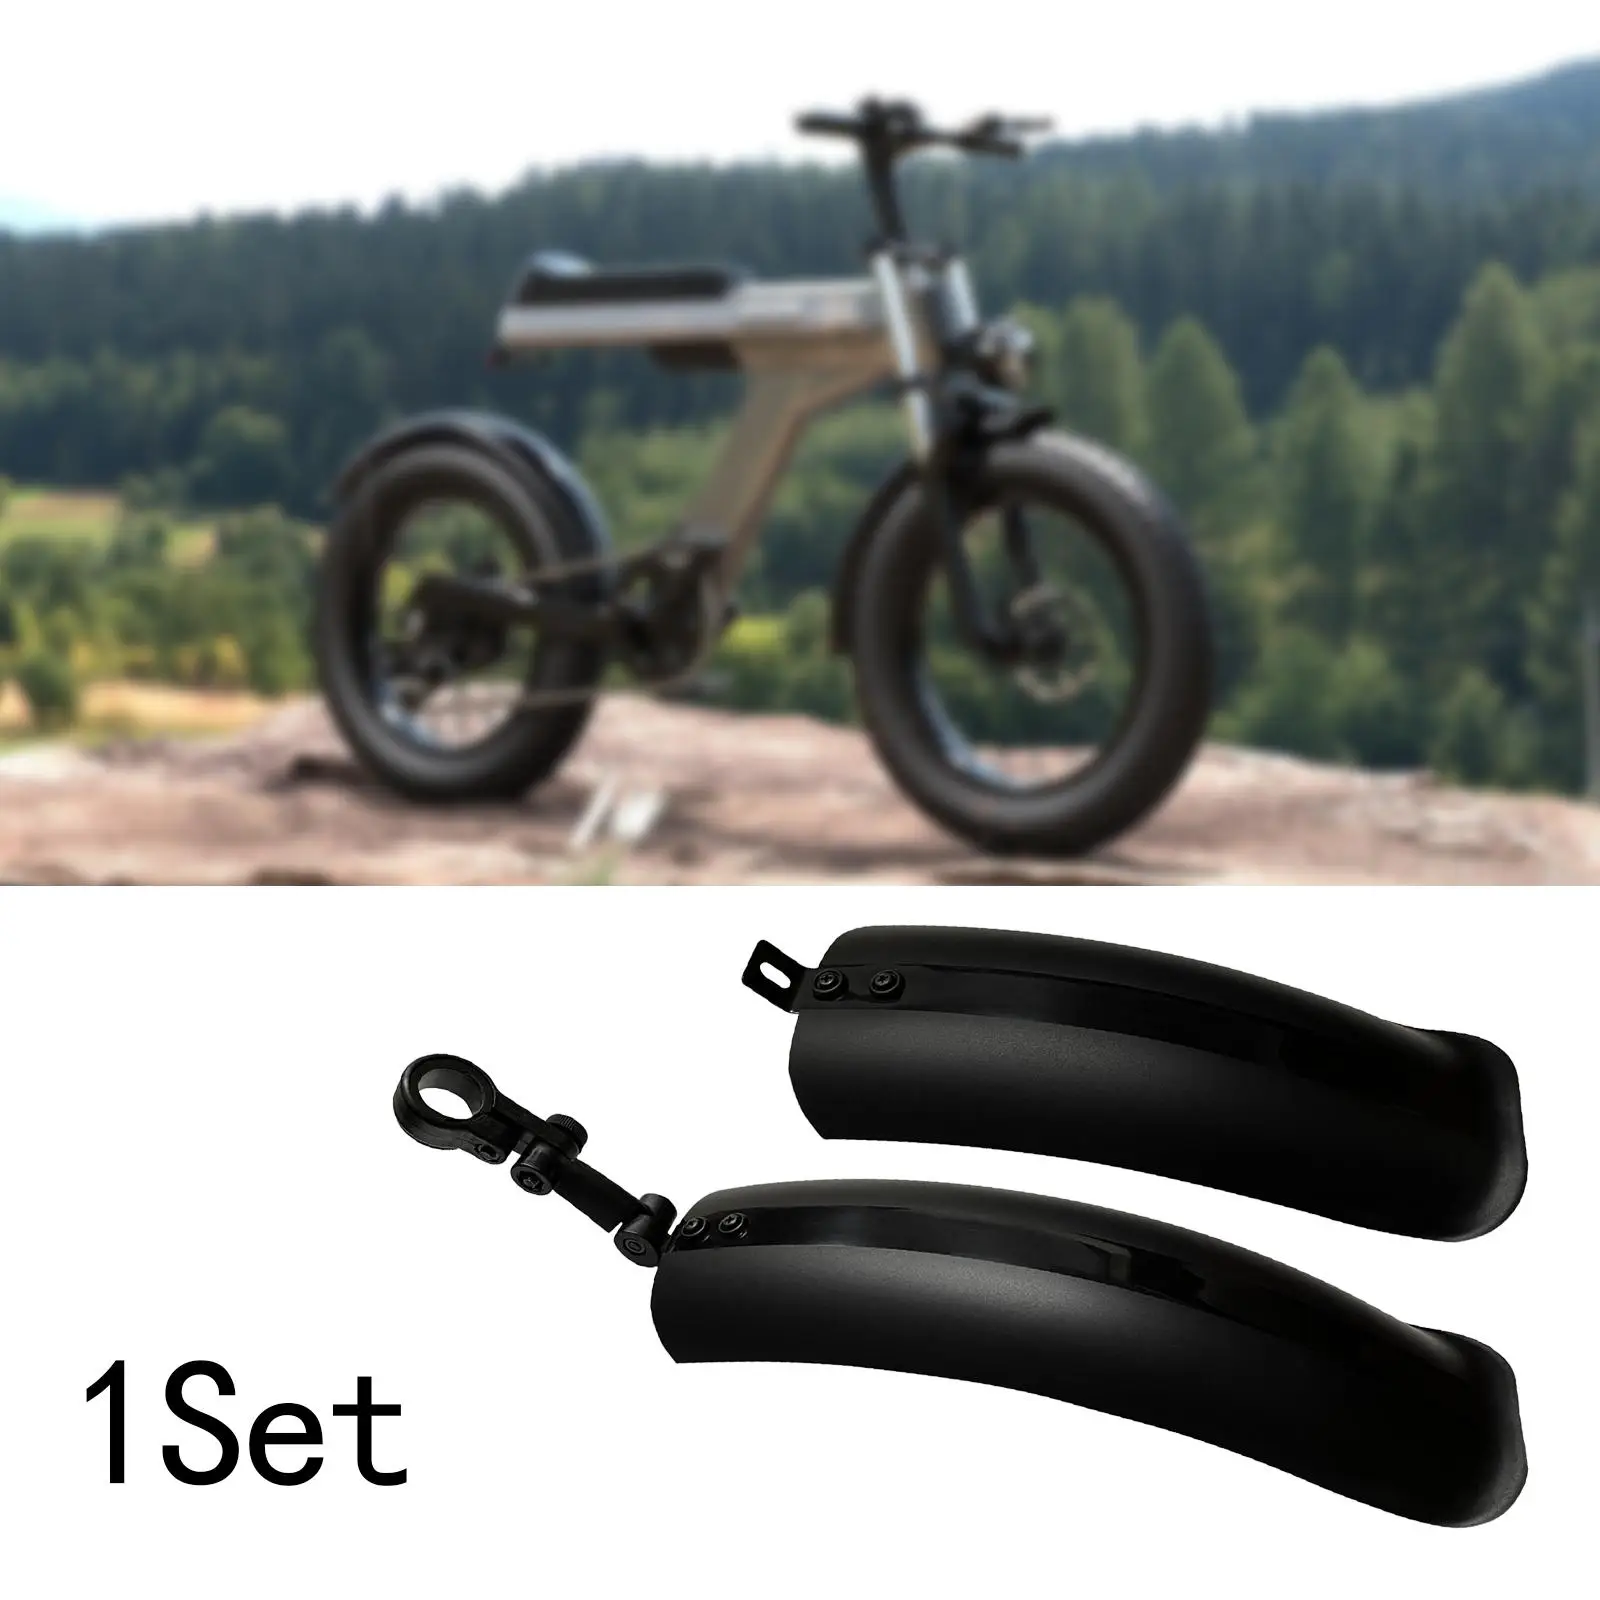 Bike Mudguard Front Rear Set Supplies Detachable Simple Installation Wheel Protector Mud Guard for Biking Snow Bikes Traveling